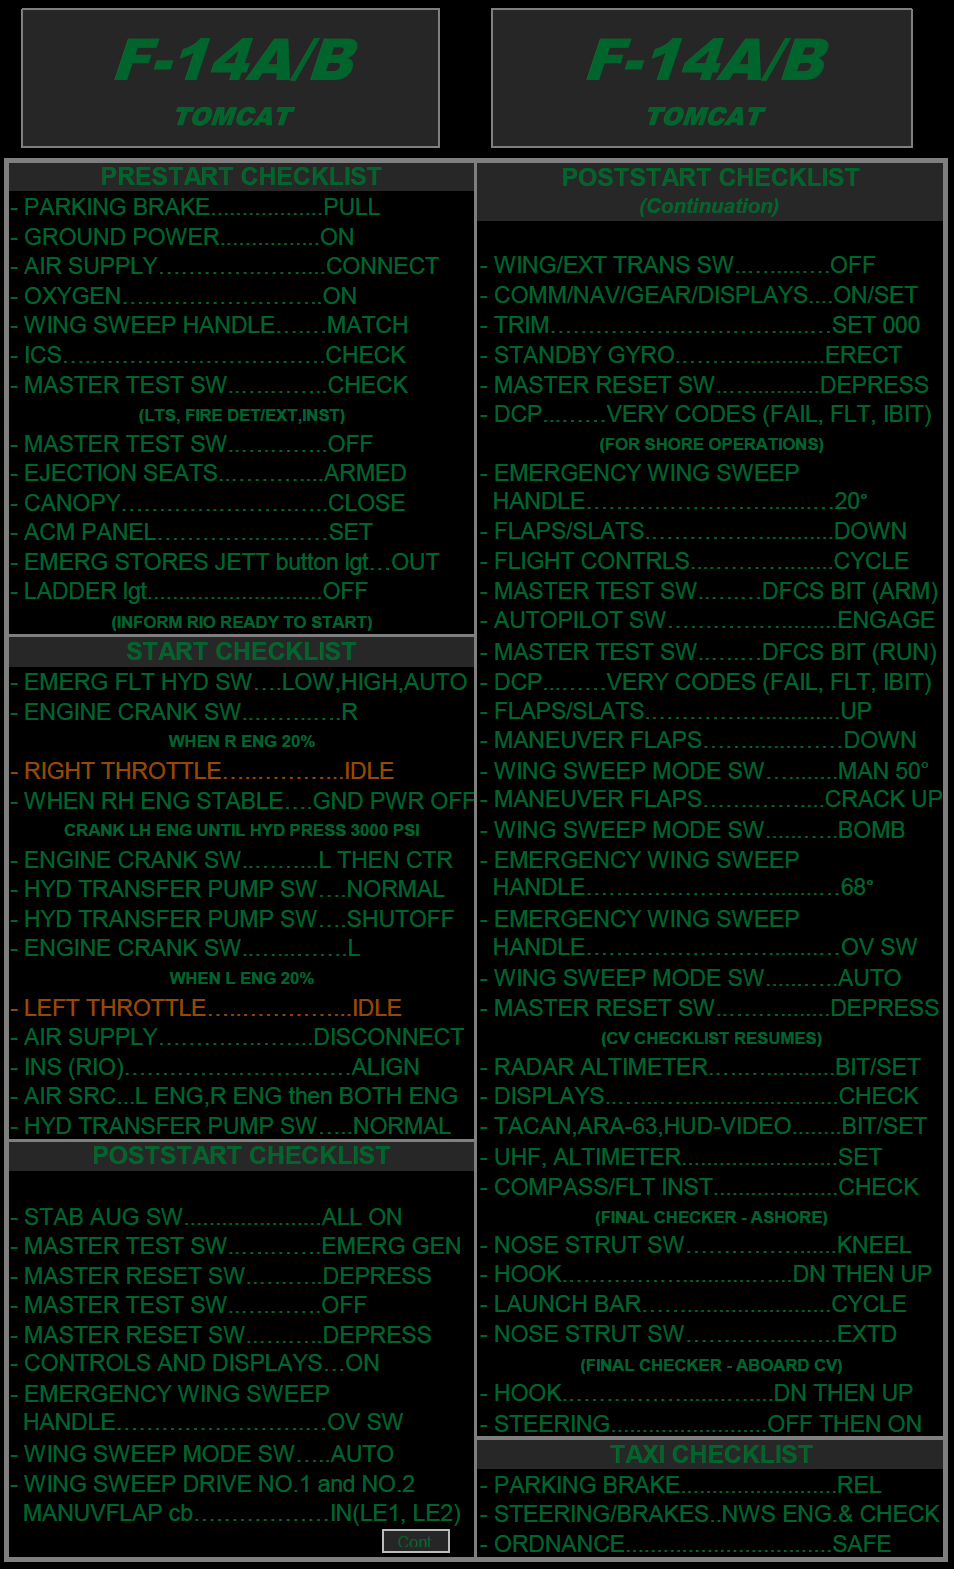 F-14A/B Tomcat Night Quick Checklist.